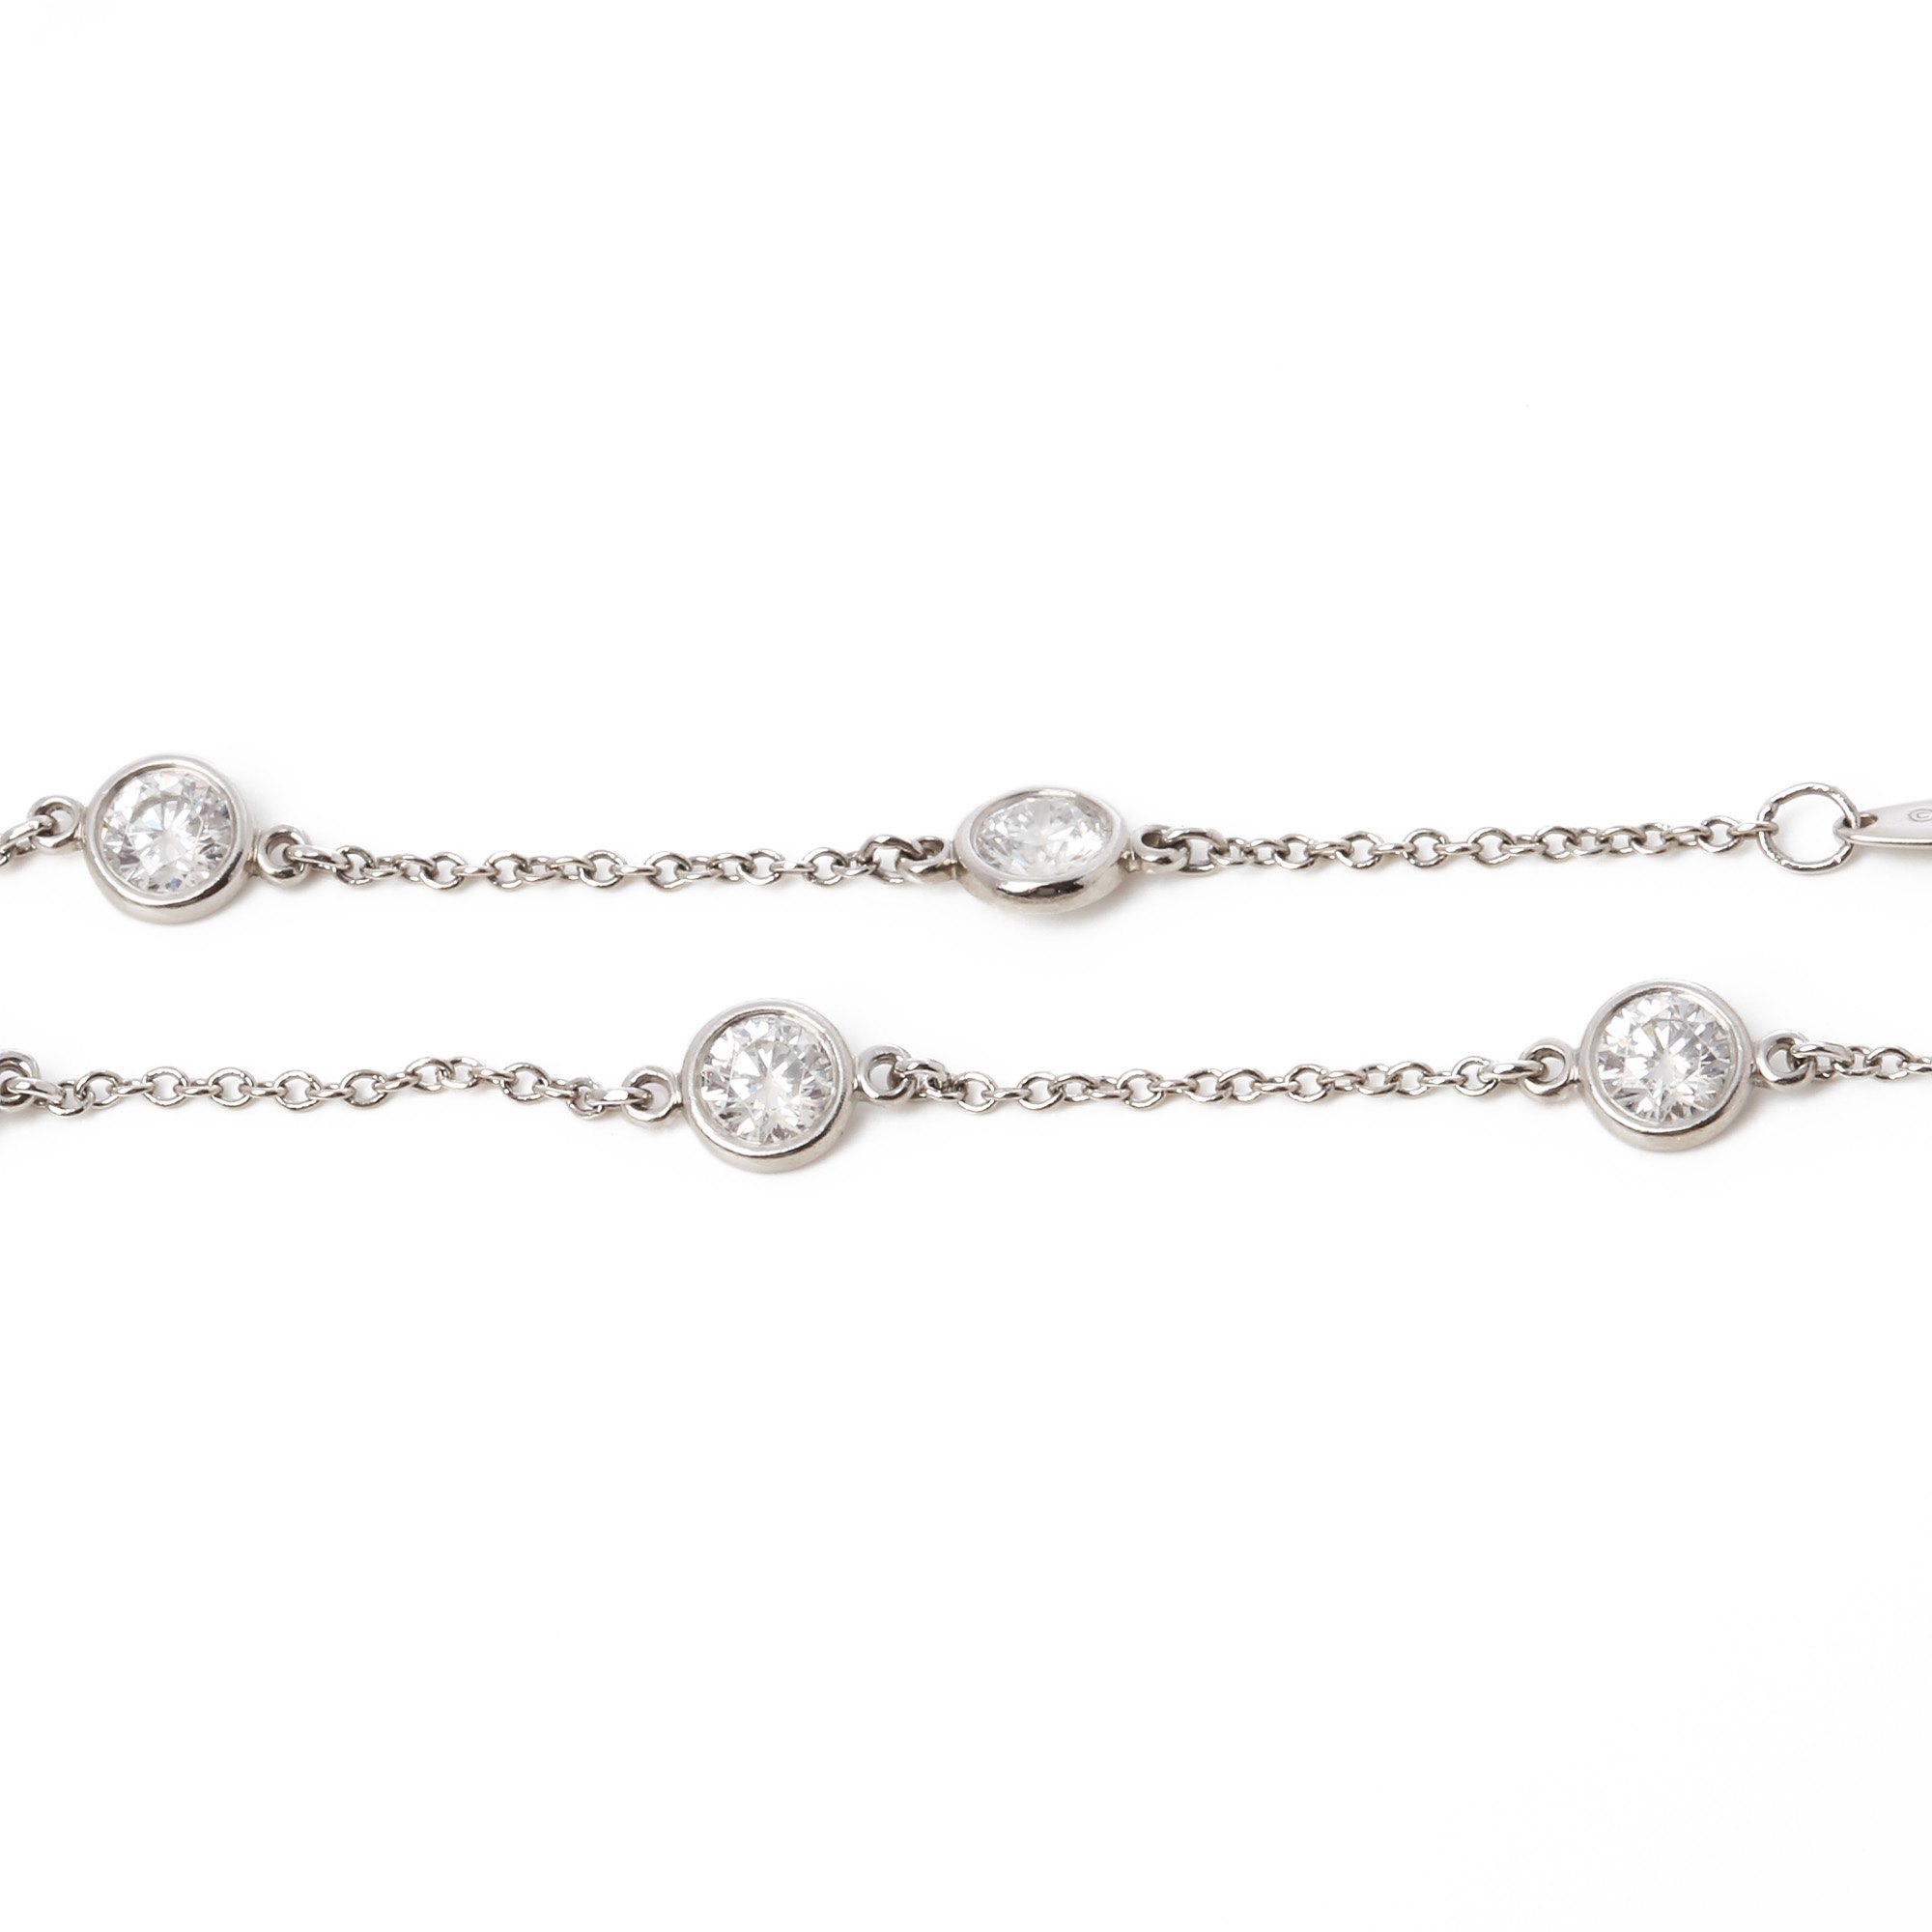 Tiffany & Co. Diamonds by the Yard bracelet